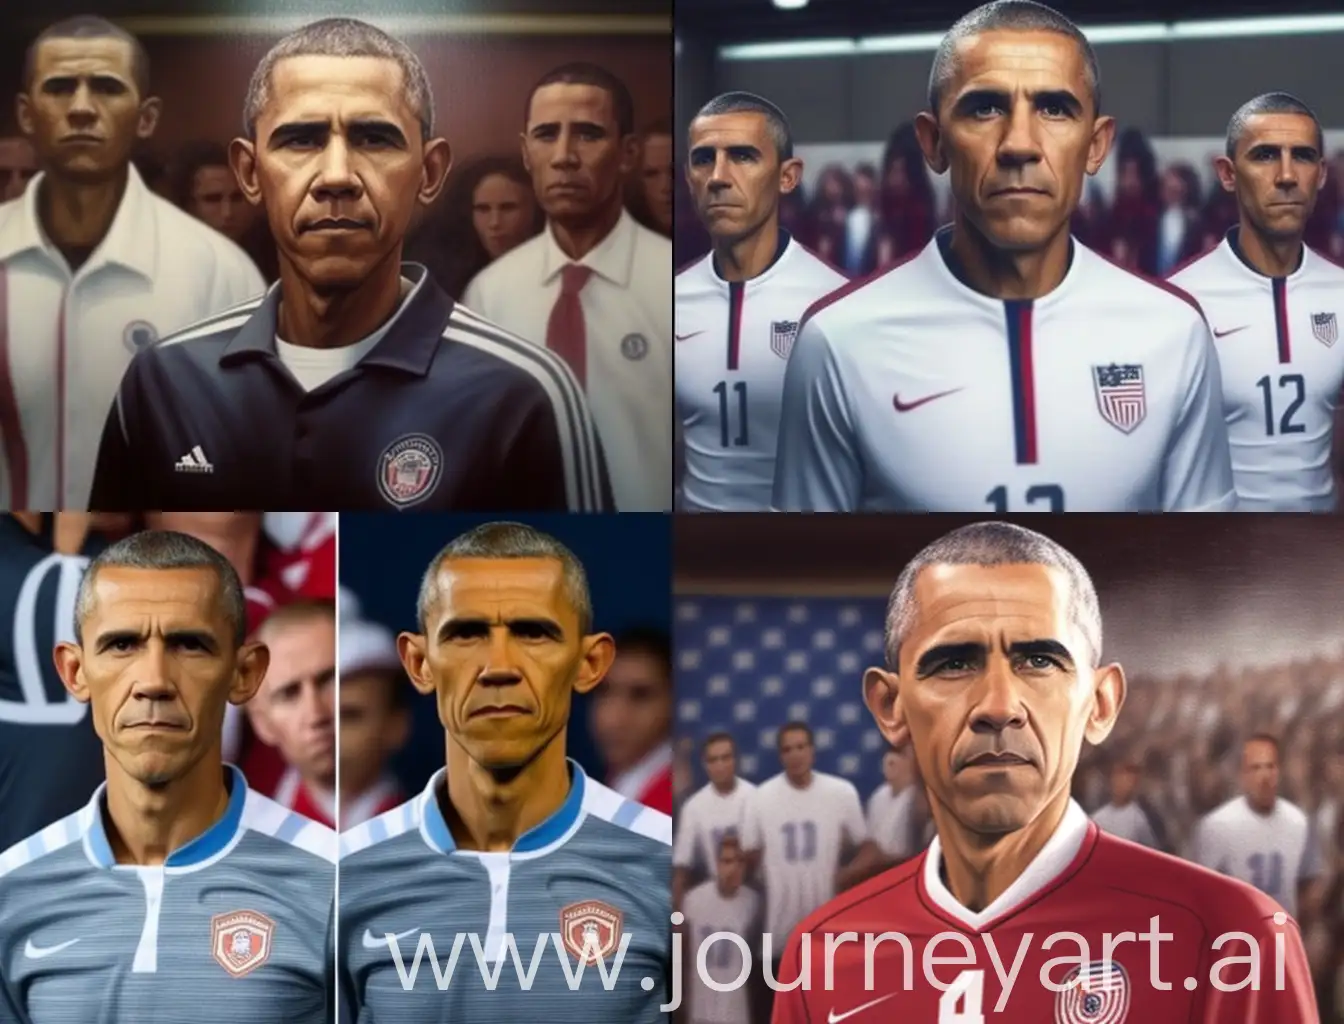 Barack-Obama-in-American-National-Team-Sports-Kit-at-Football-Stadium